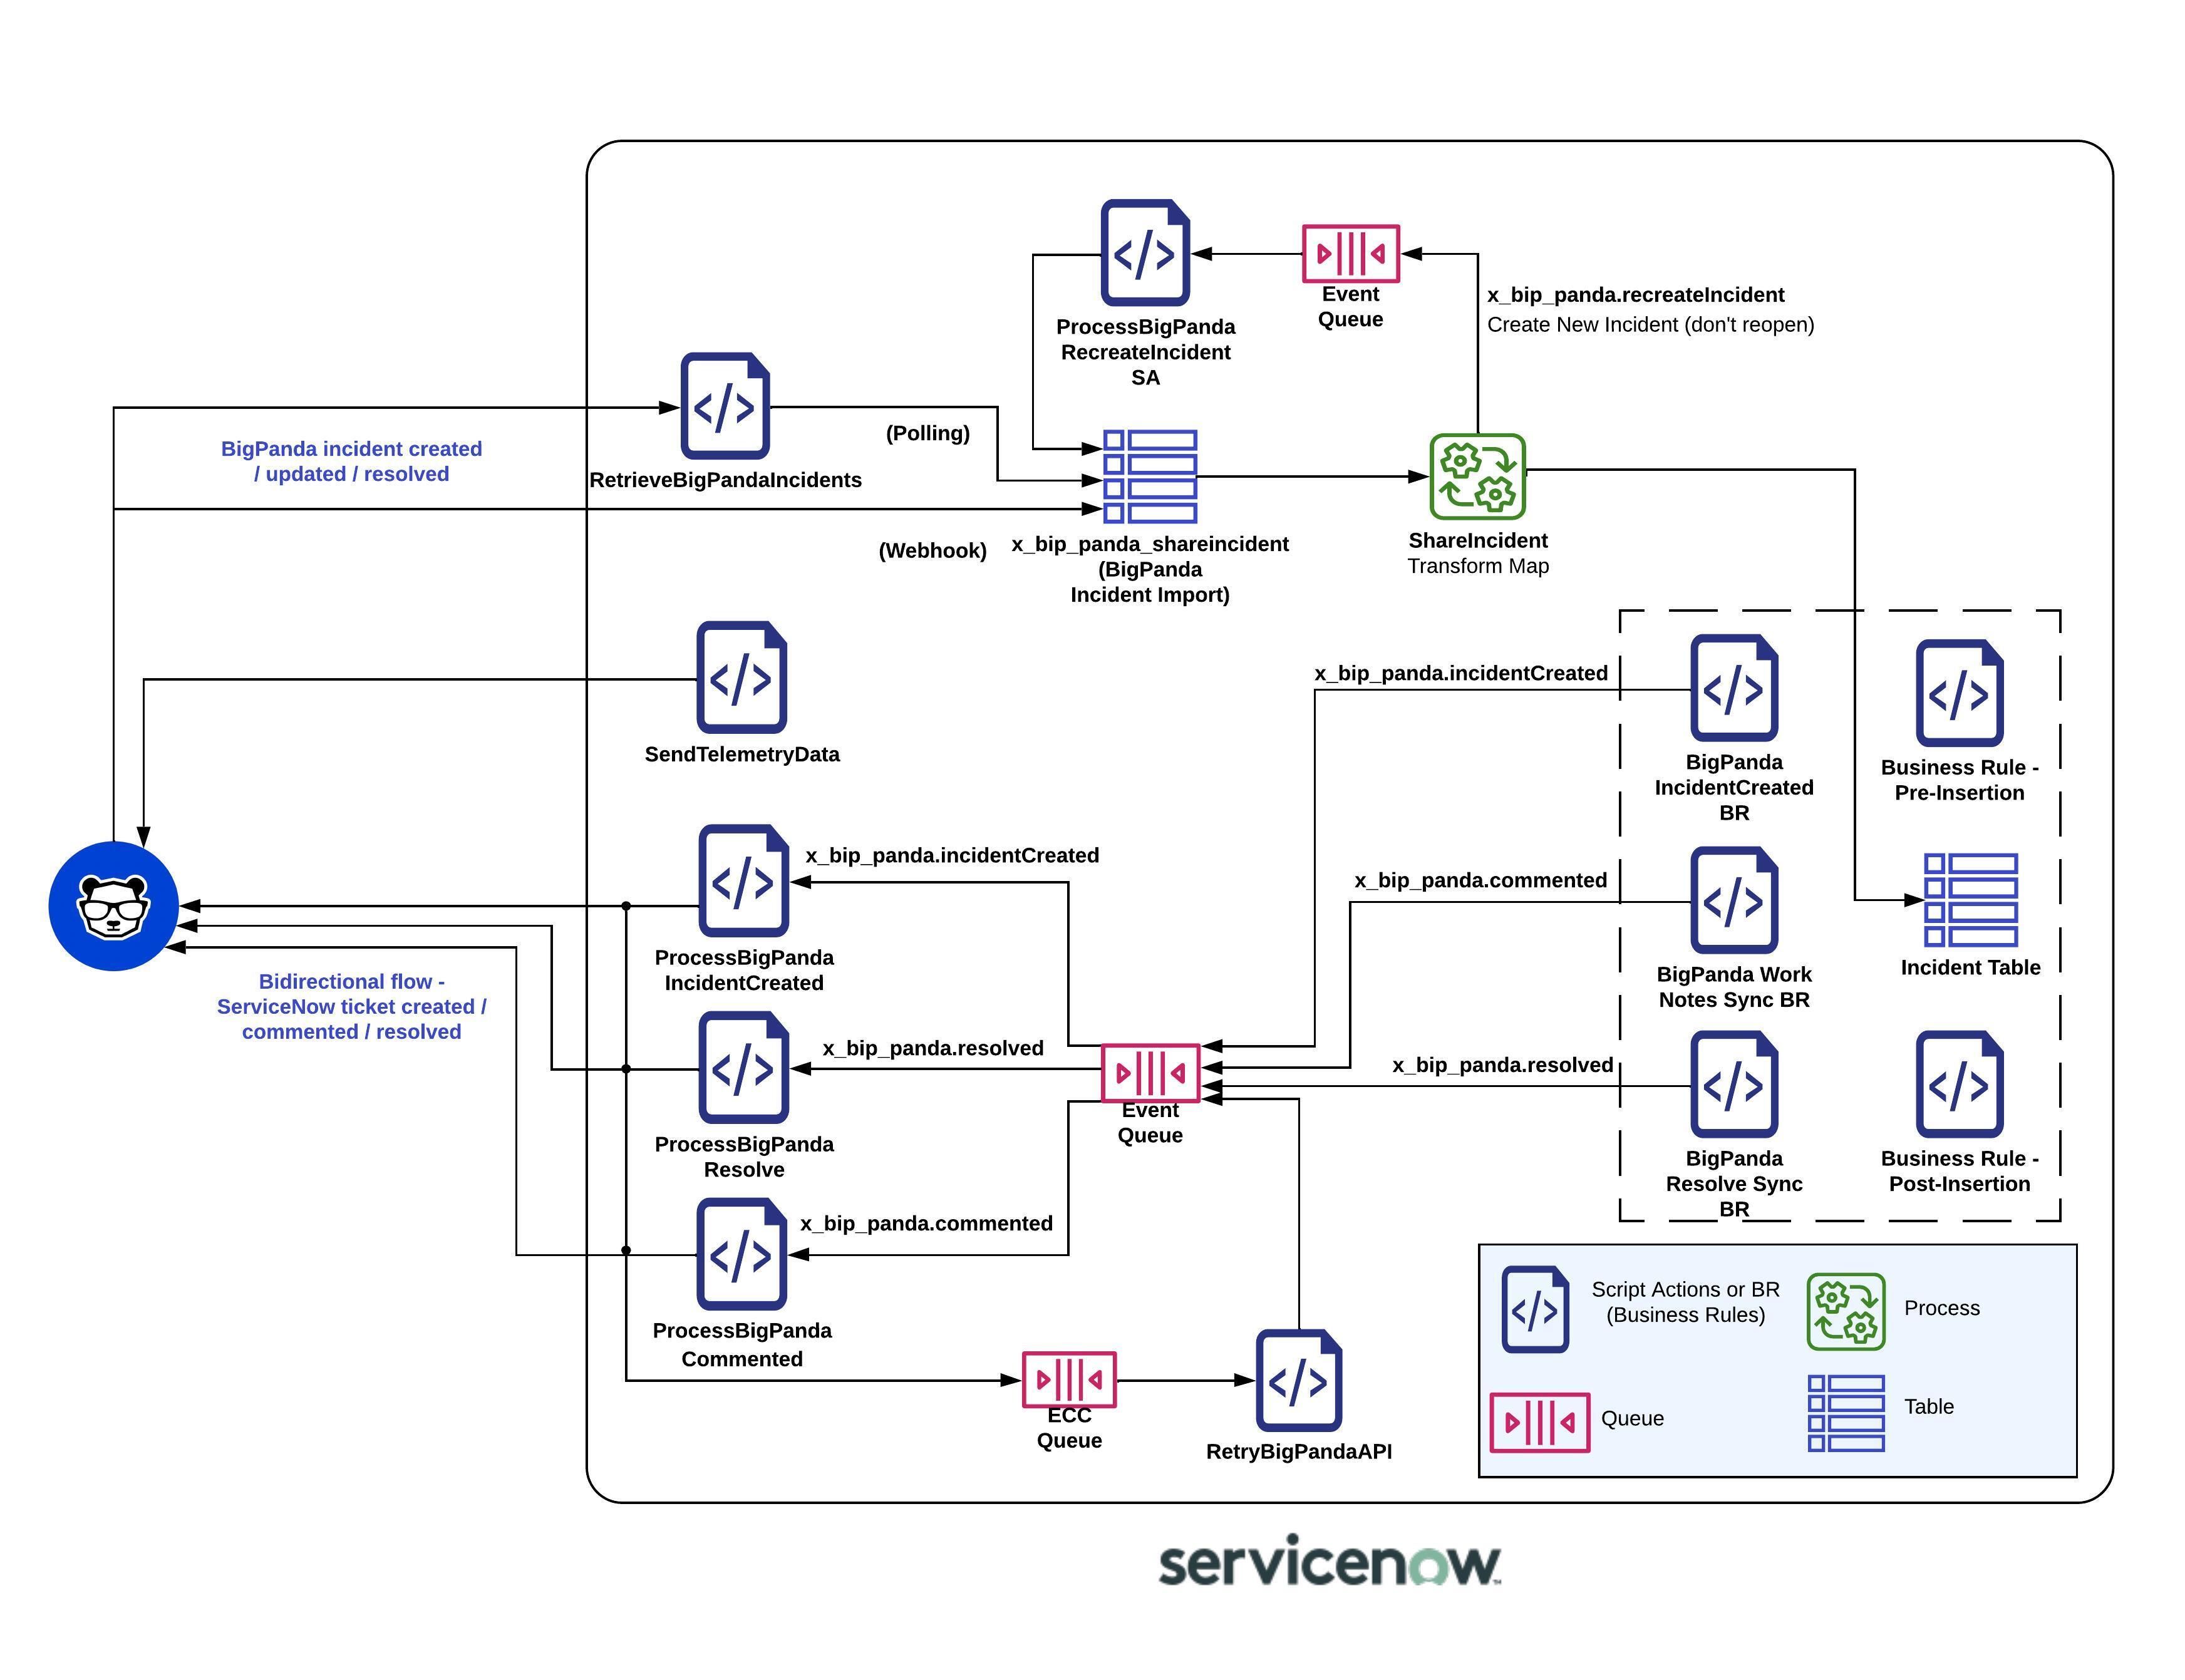 BigPanda ServiceNow Application Architecture (Incident module)